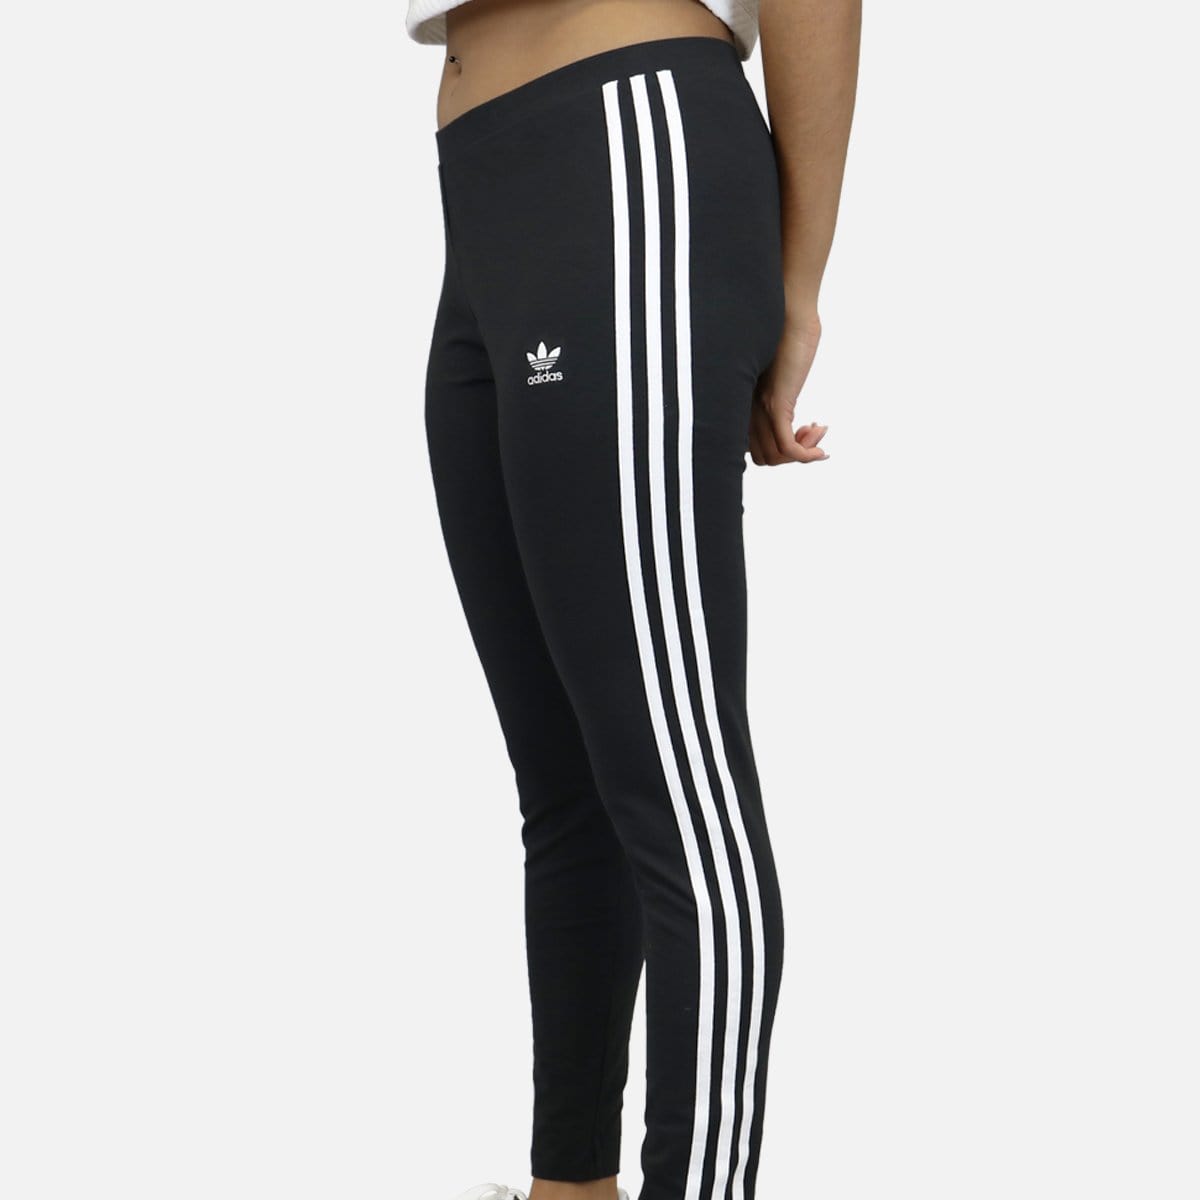 RUVilla.com is where to buy the adidas 3-Stripes Leggings (Black/White)!